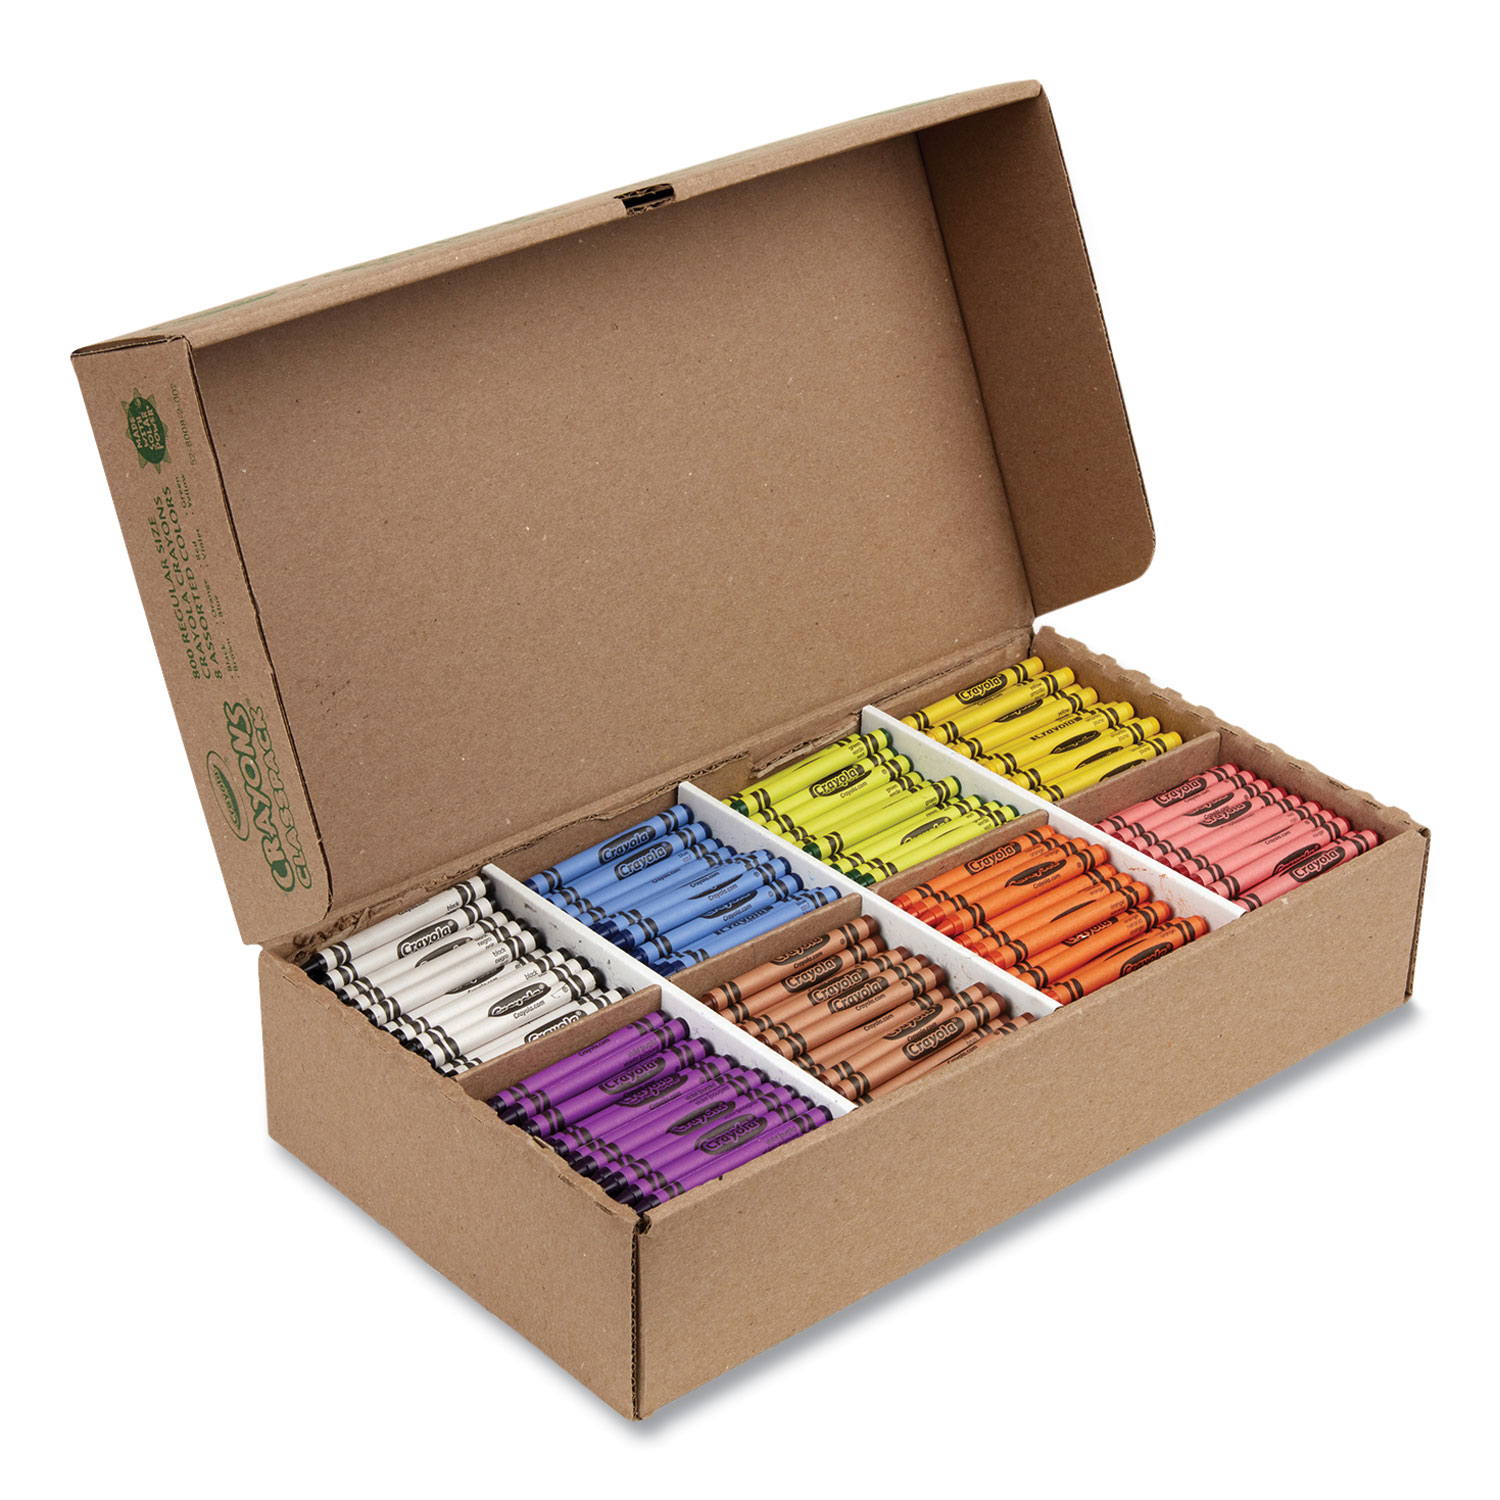 Crayola CYO528016 Classpack Regular Crayons - 16 pack, 50 count each